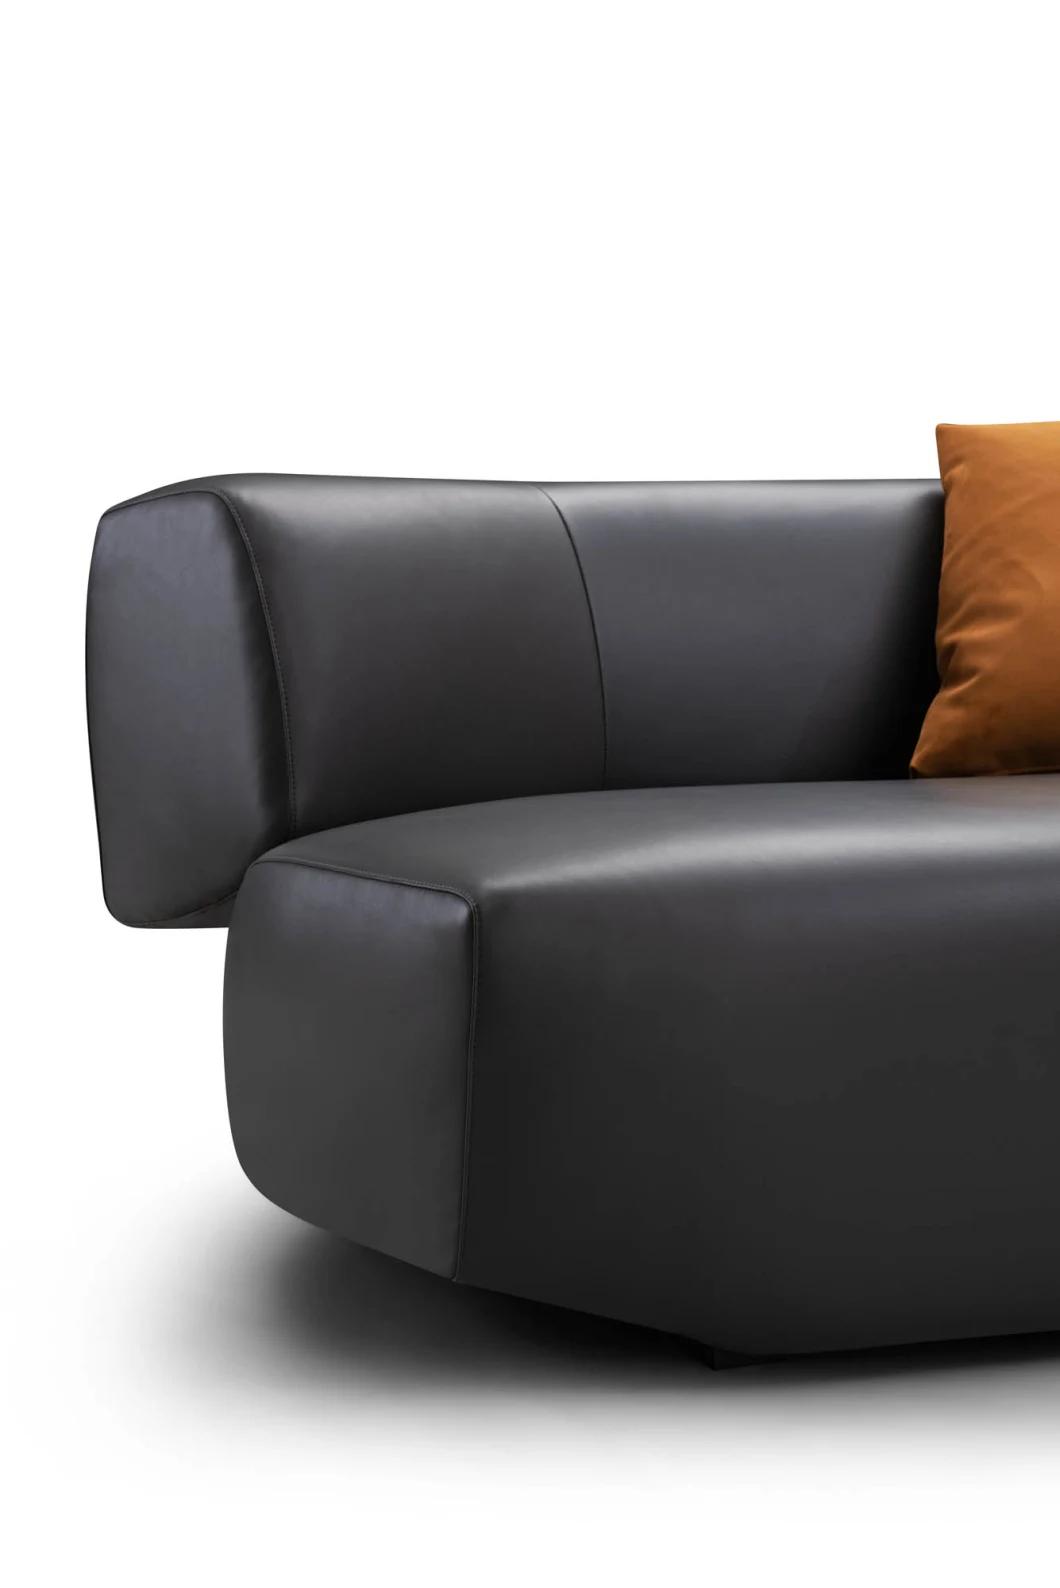 Living Room Furniture Modern Leather Sofa